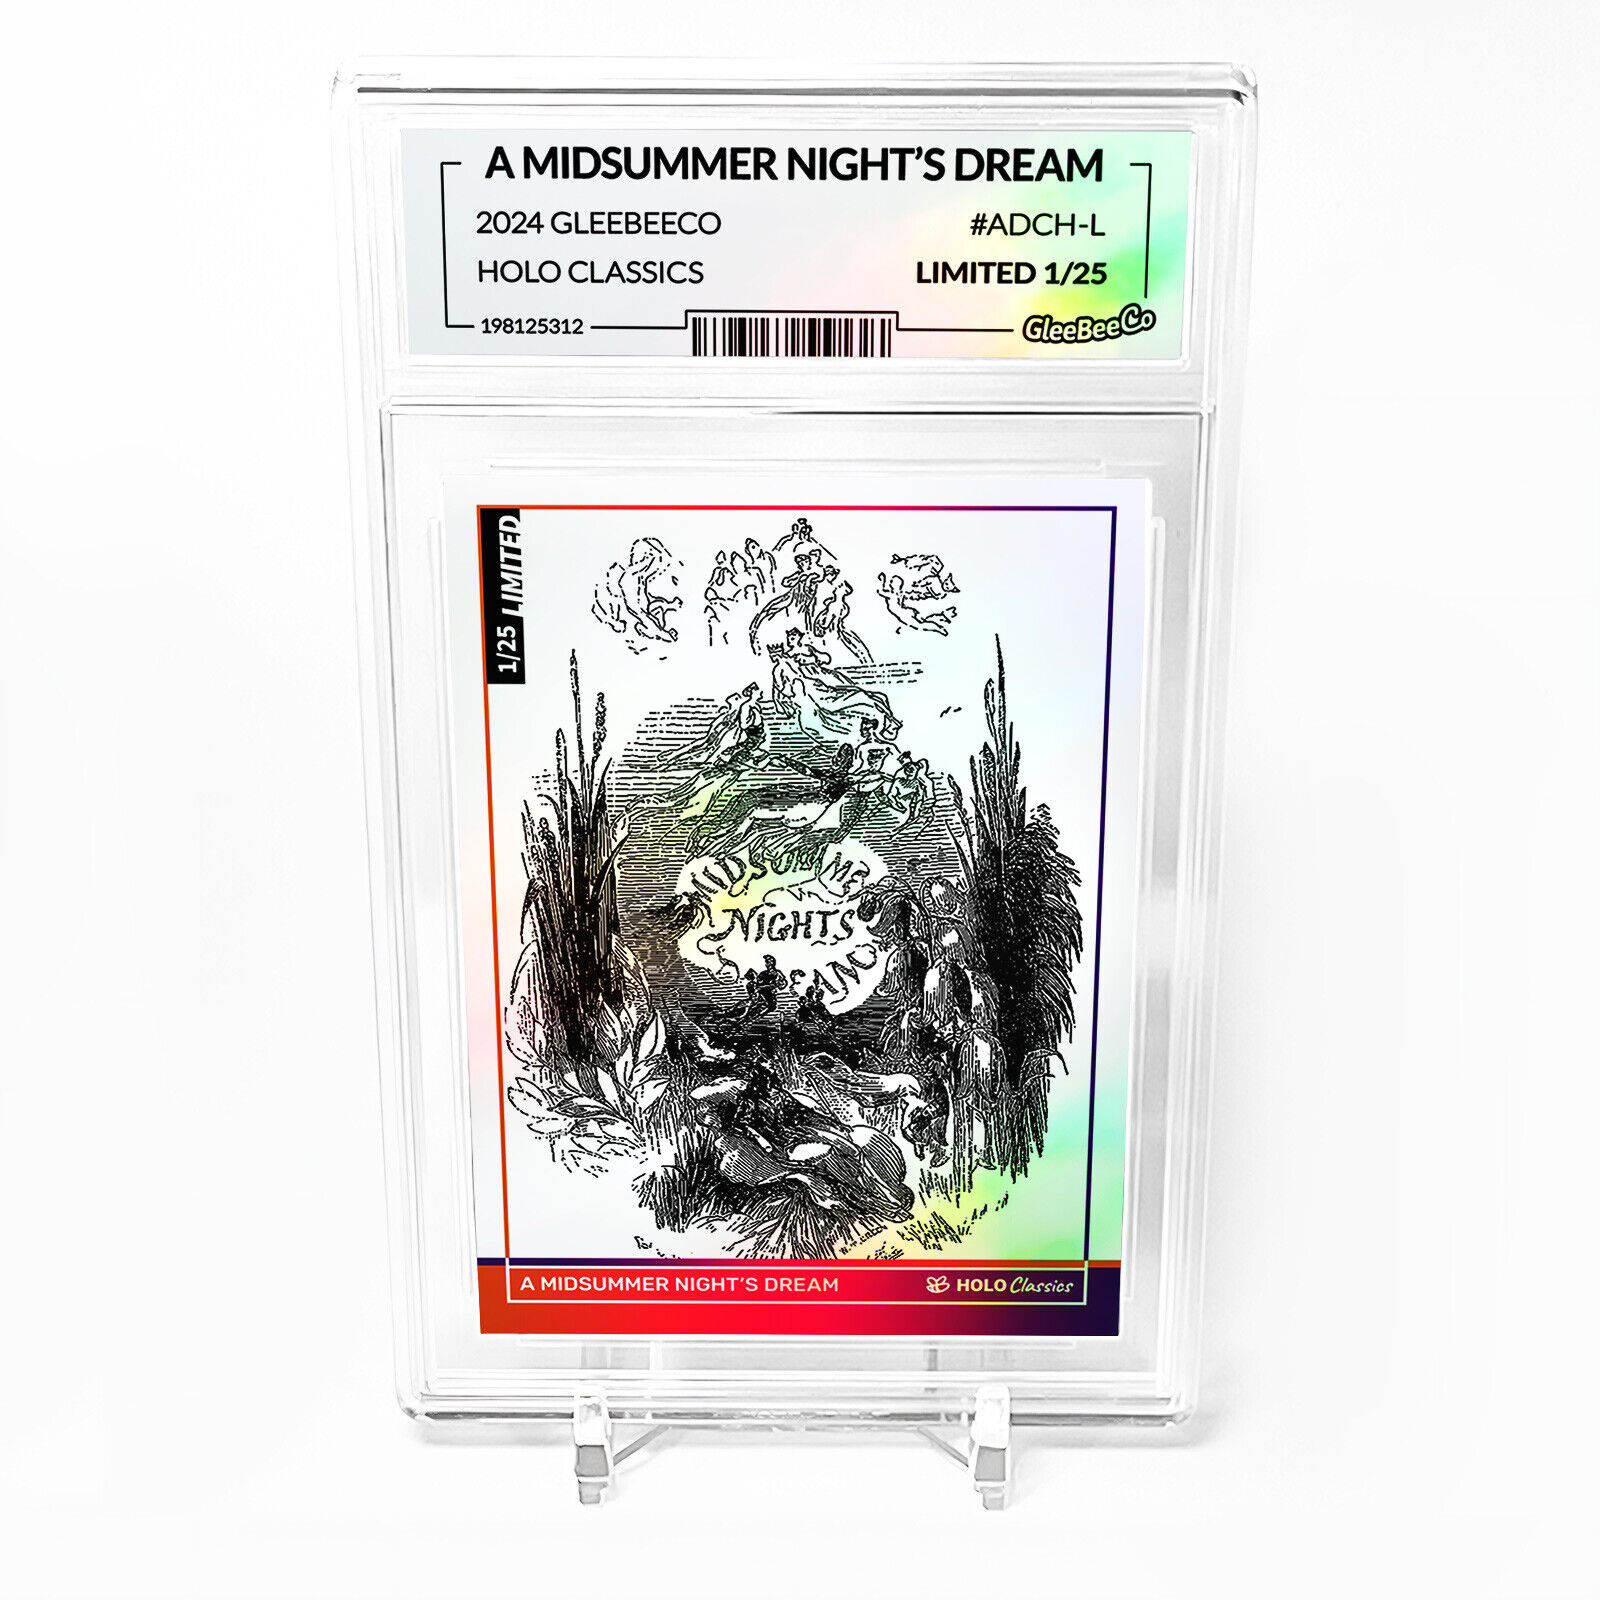 A MIDSUMMER NIGHT'S DREAM Art Card 2024 GleeBeeCo Holo Classics #ADCH-L /25 Made